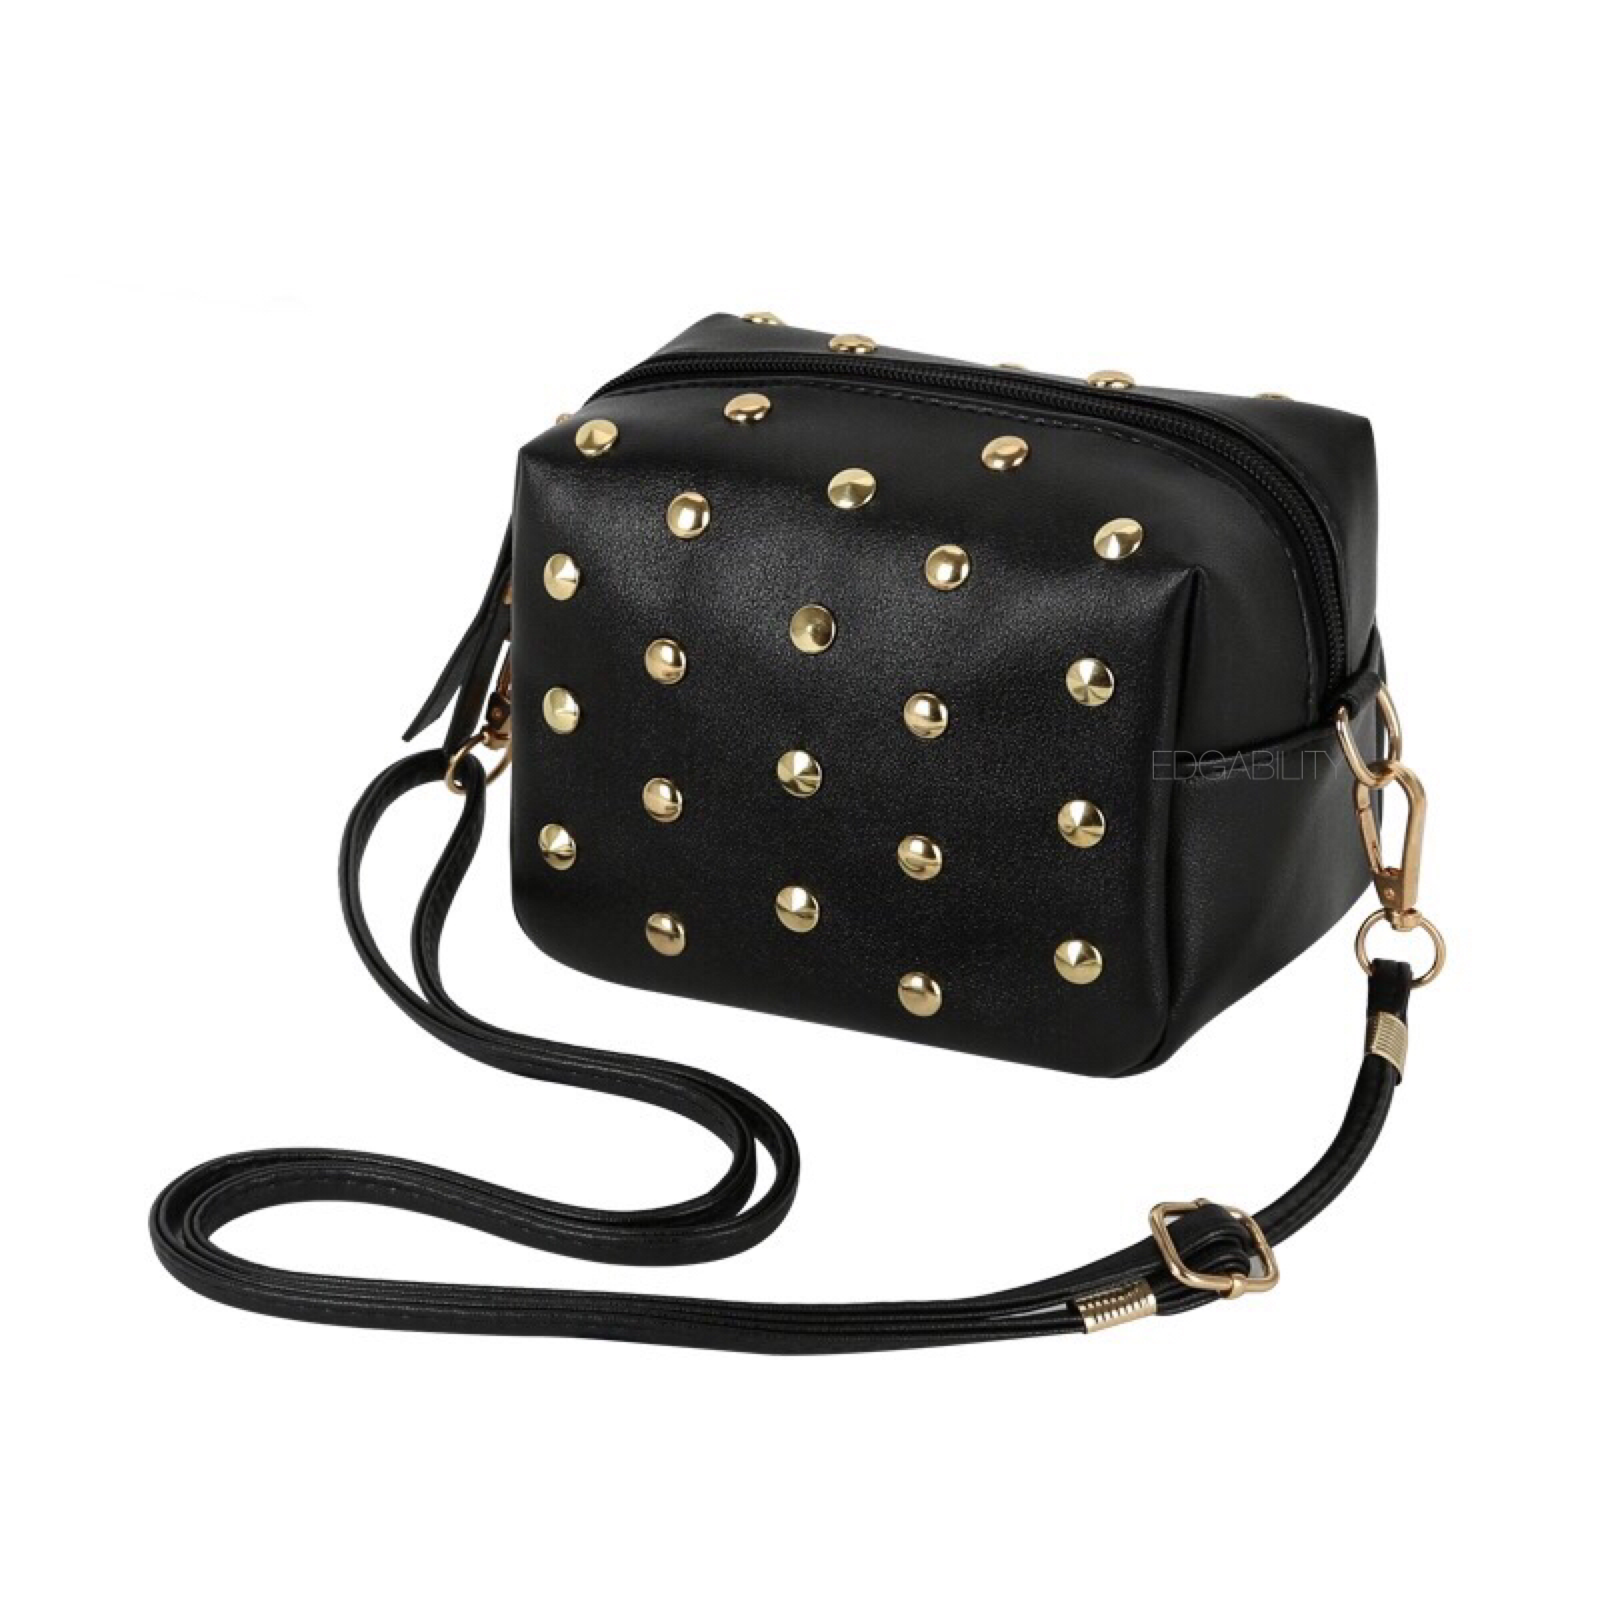 Buy Women Skull Handbag Tote Purse Large Capacity Gothic Shoulder Bag with  Strap Studded Doctor Handbag, Black at Amazon.in